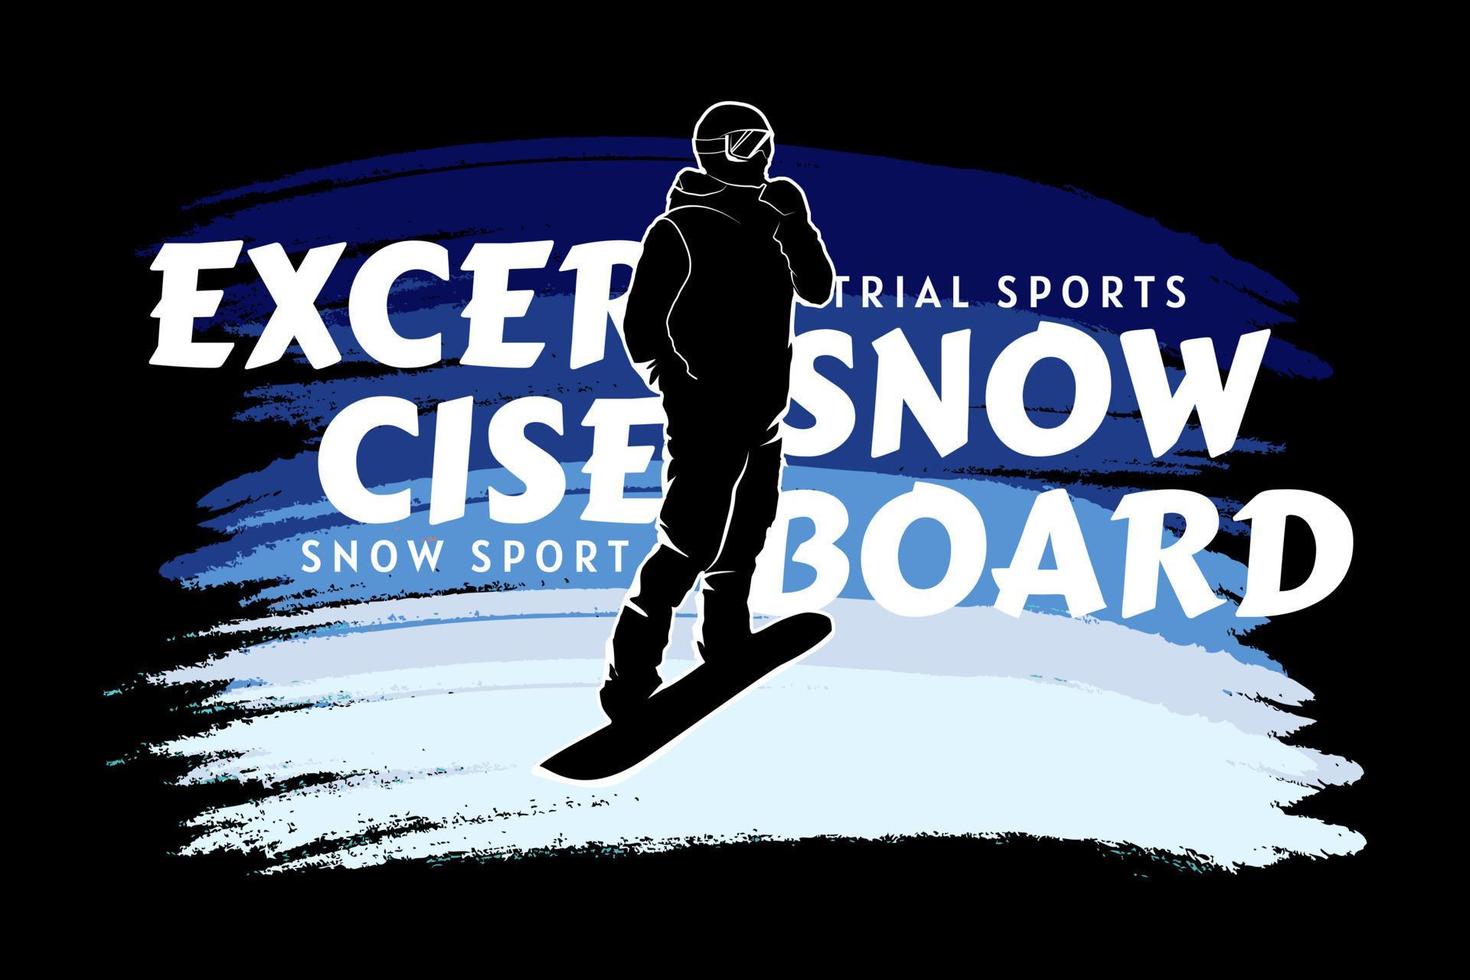 exercice snowboard silhouette rétro design vecteur